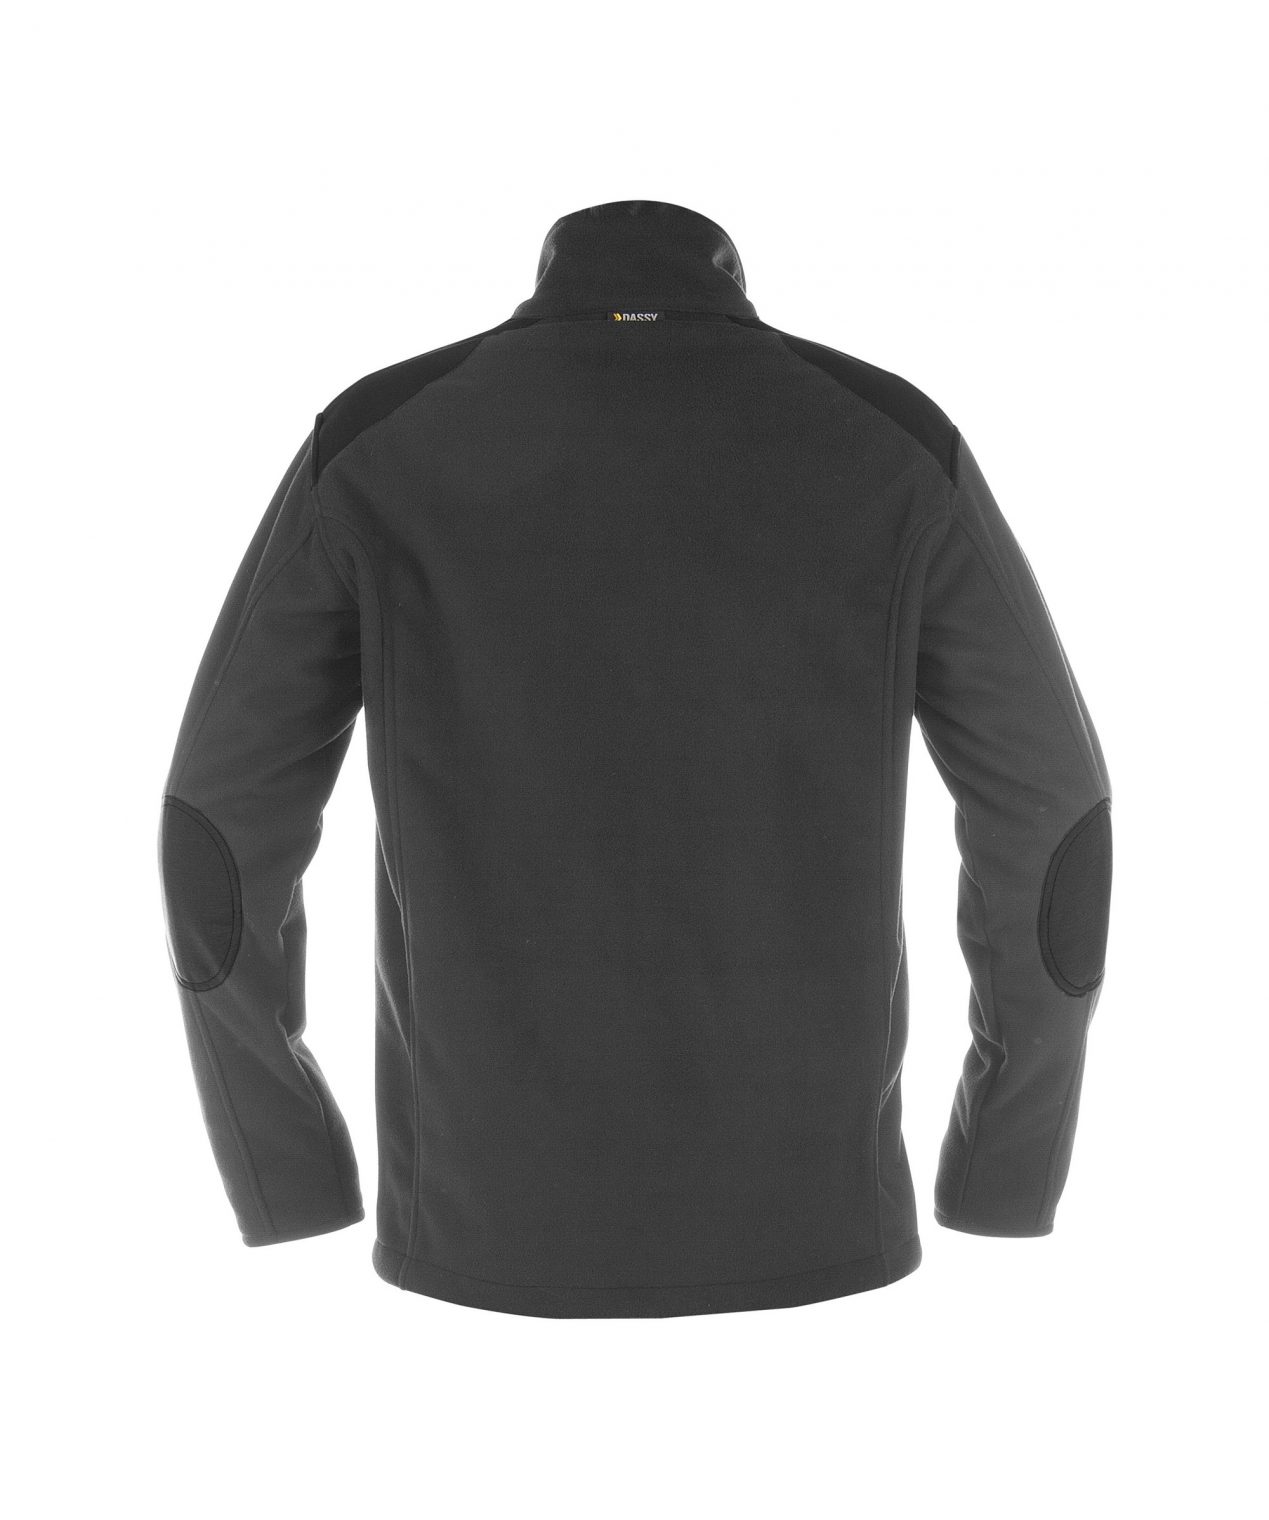 croft three layered fleece jacket anthracite grey black back